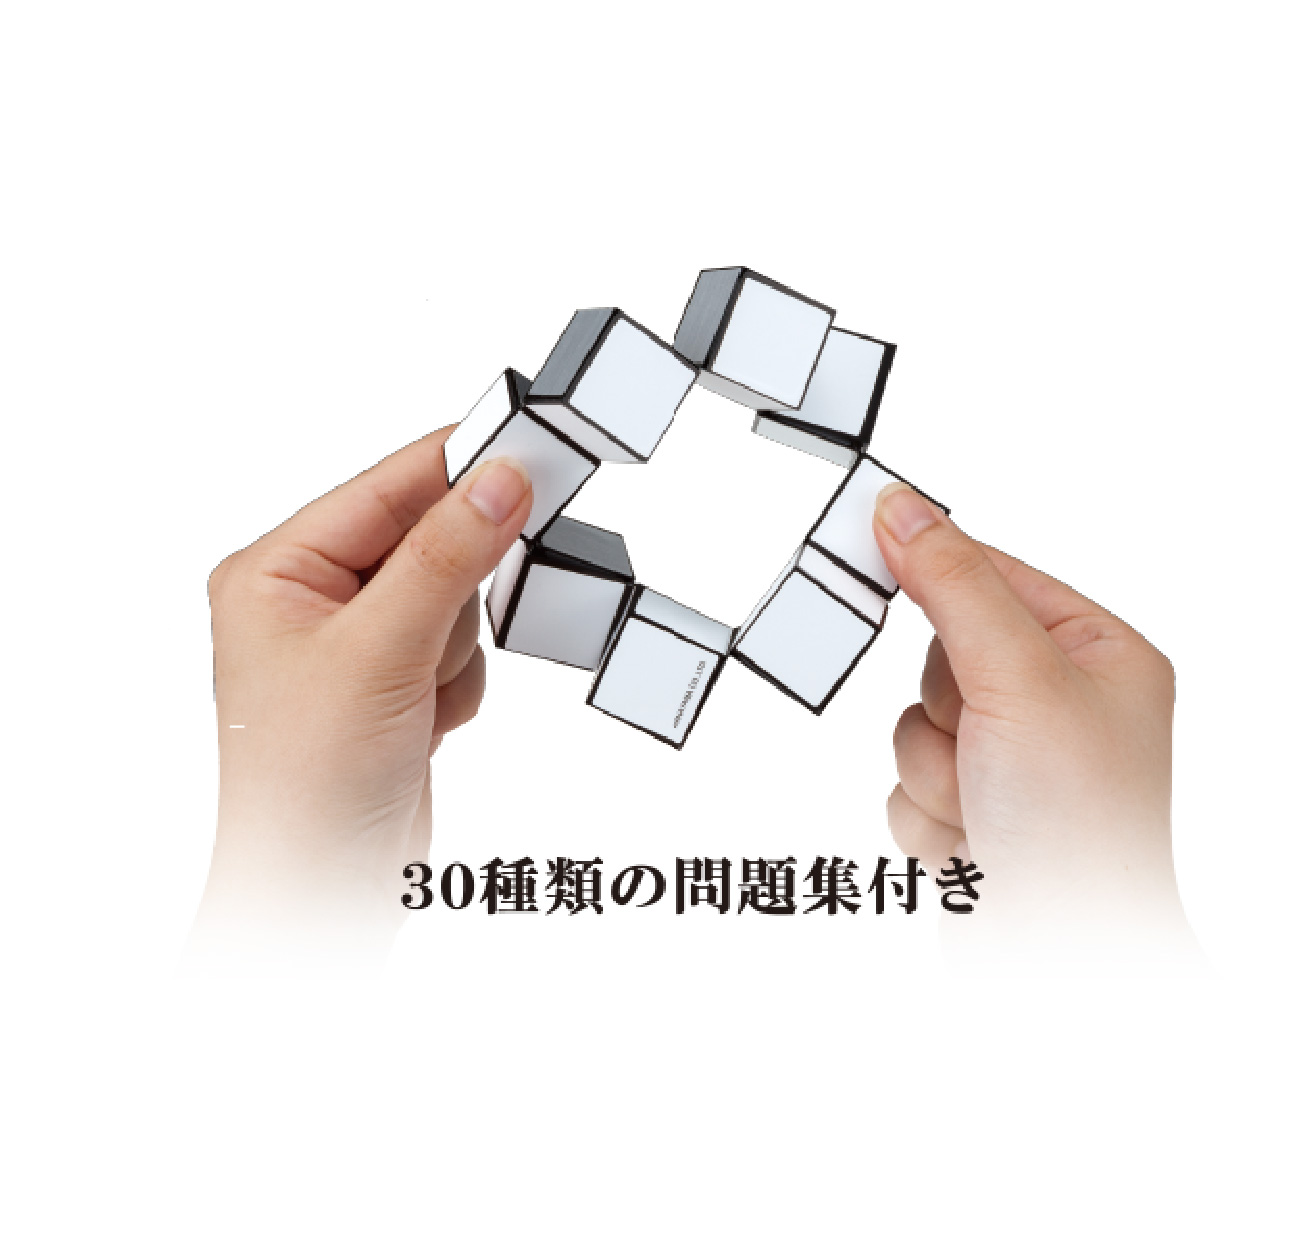 Hanayama Katsunou Pazzle Brain lucky cube From japan 